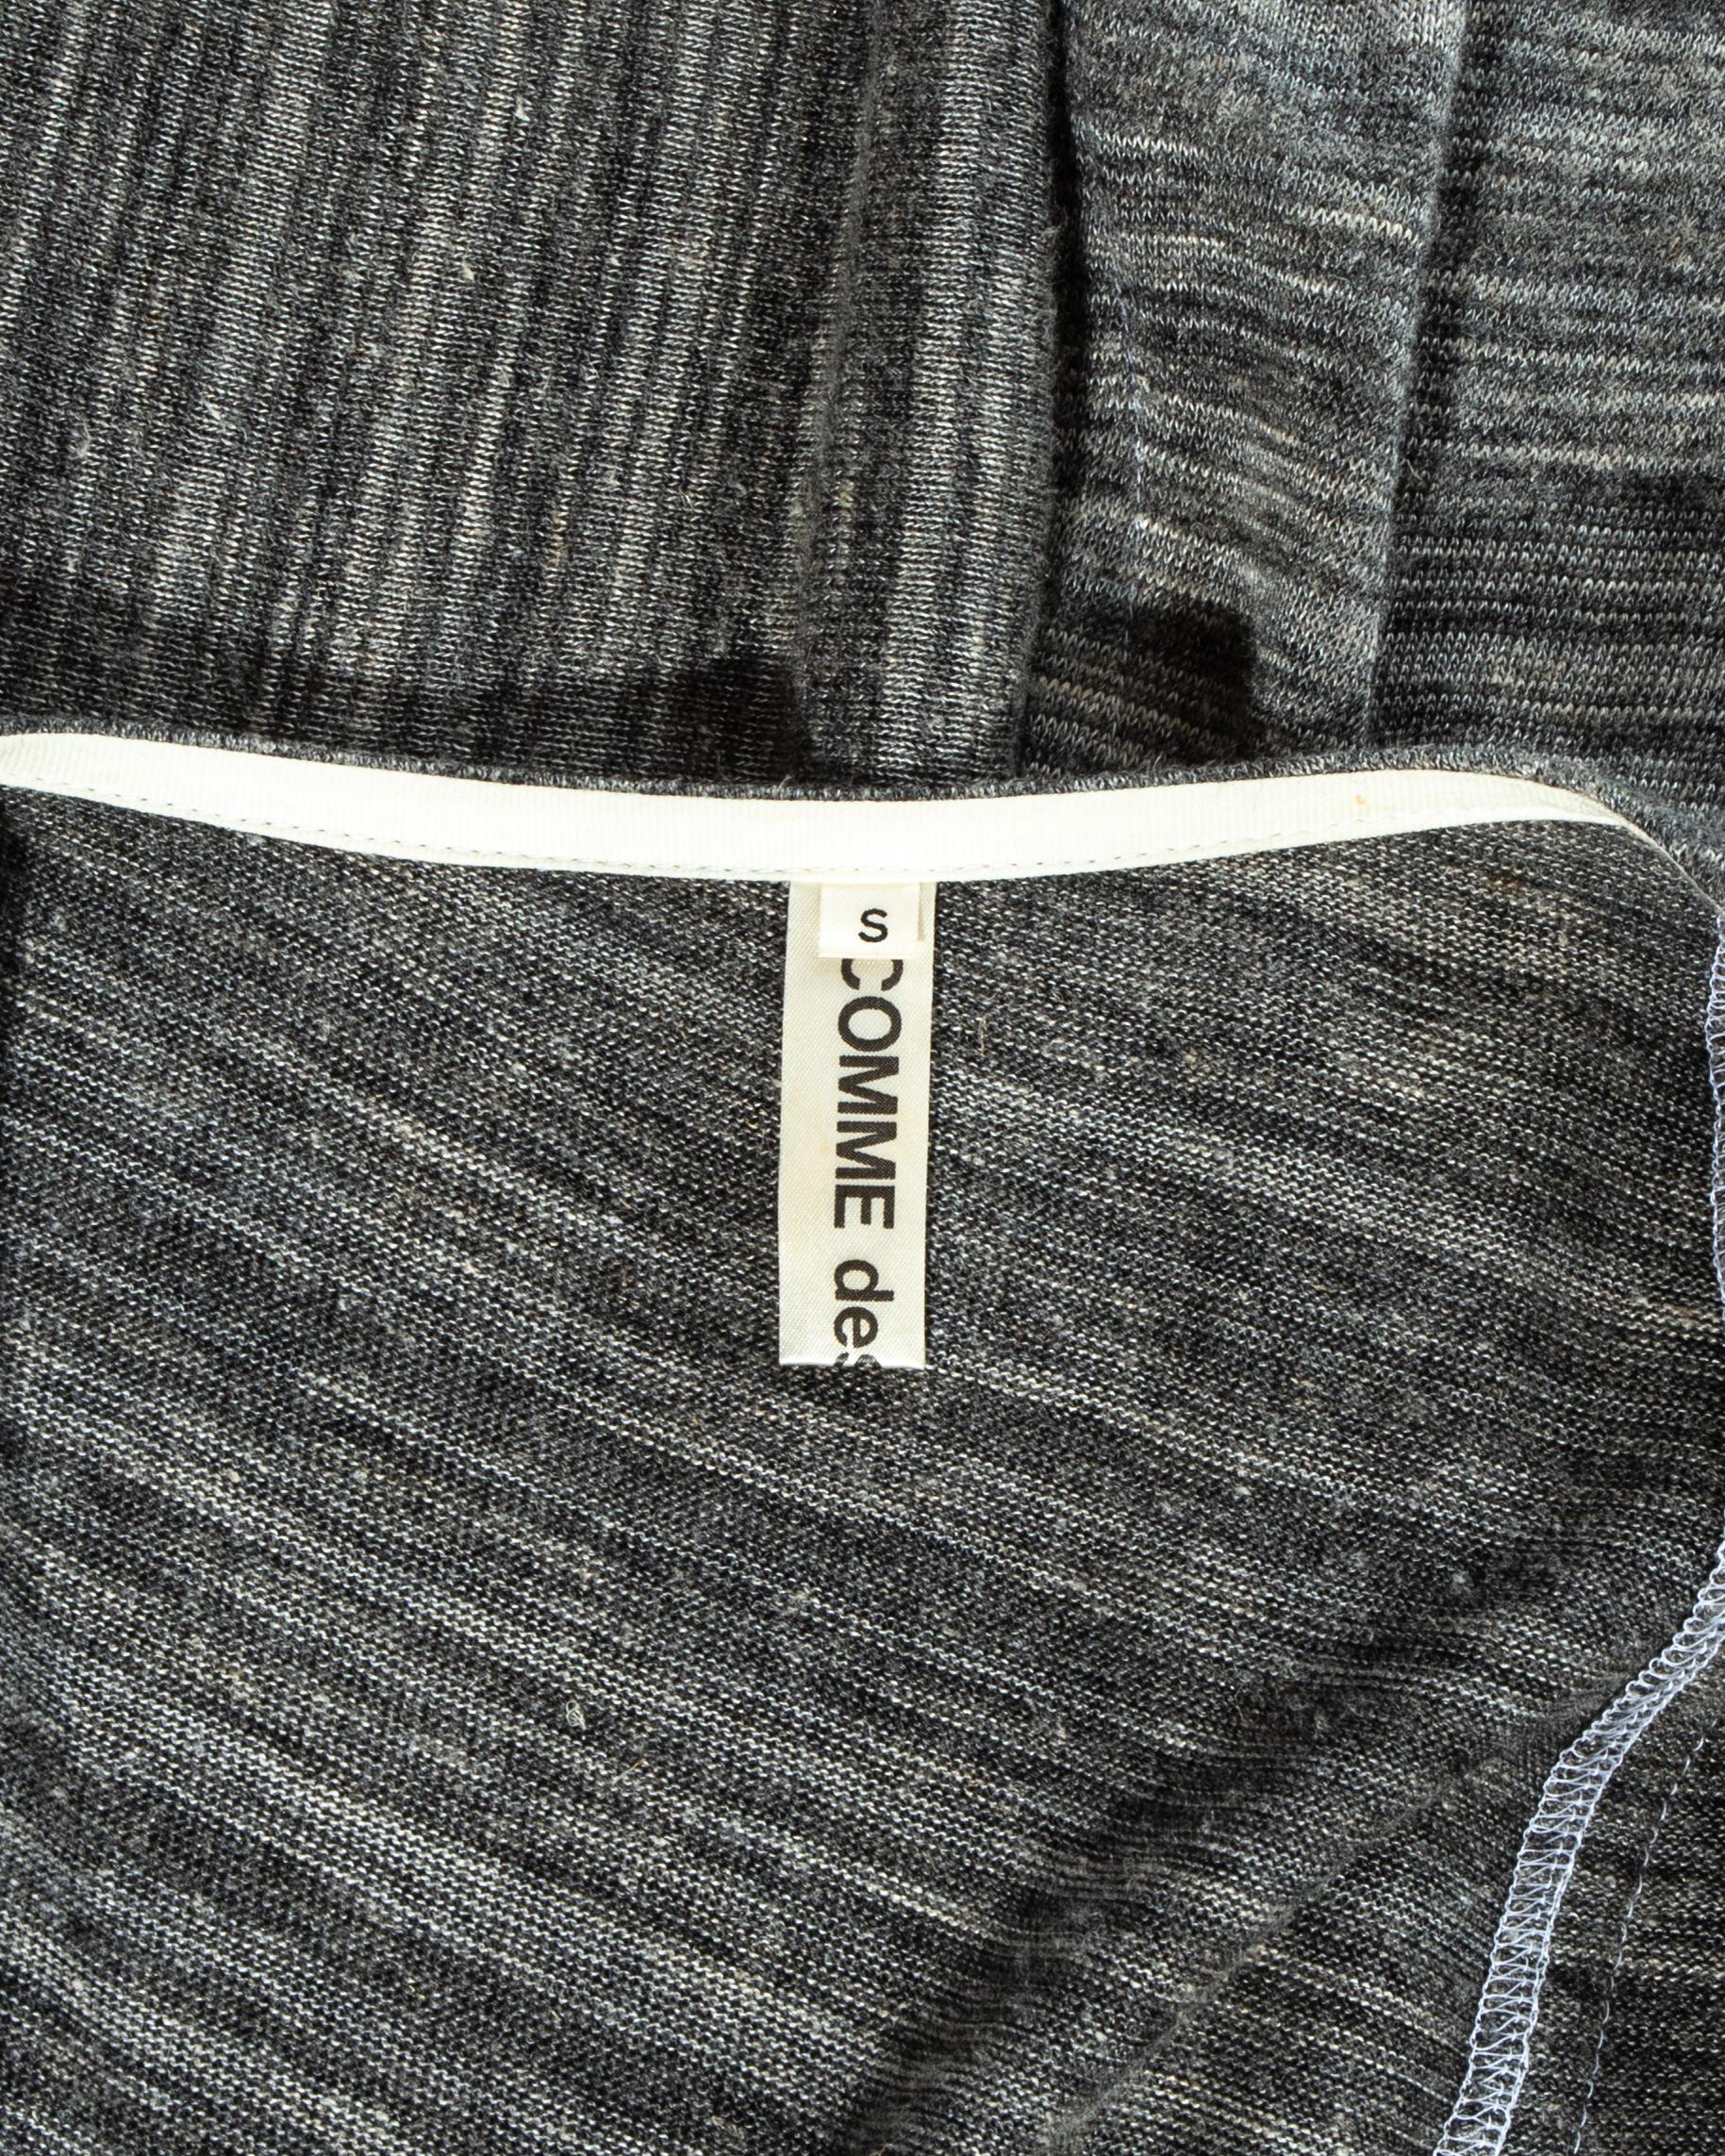 Comme des Garçons grey jersey deconstructed sweater dress, fw 1998 For Sale 2